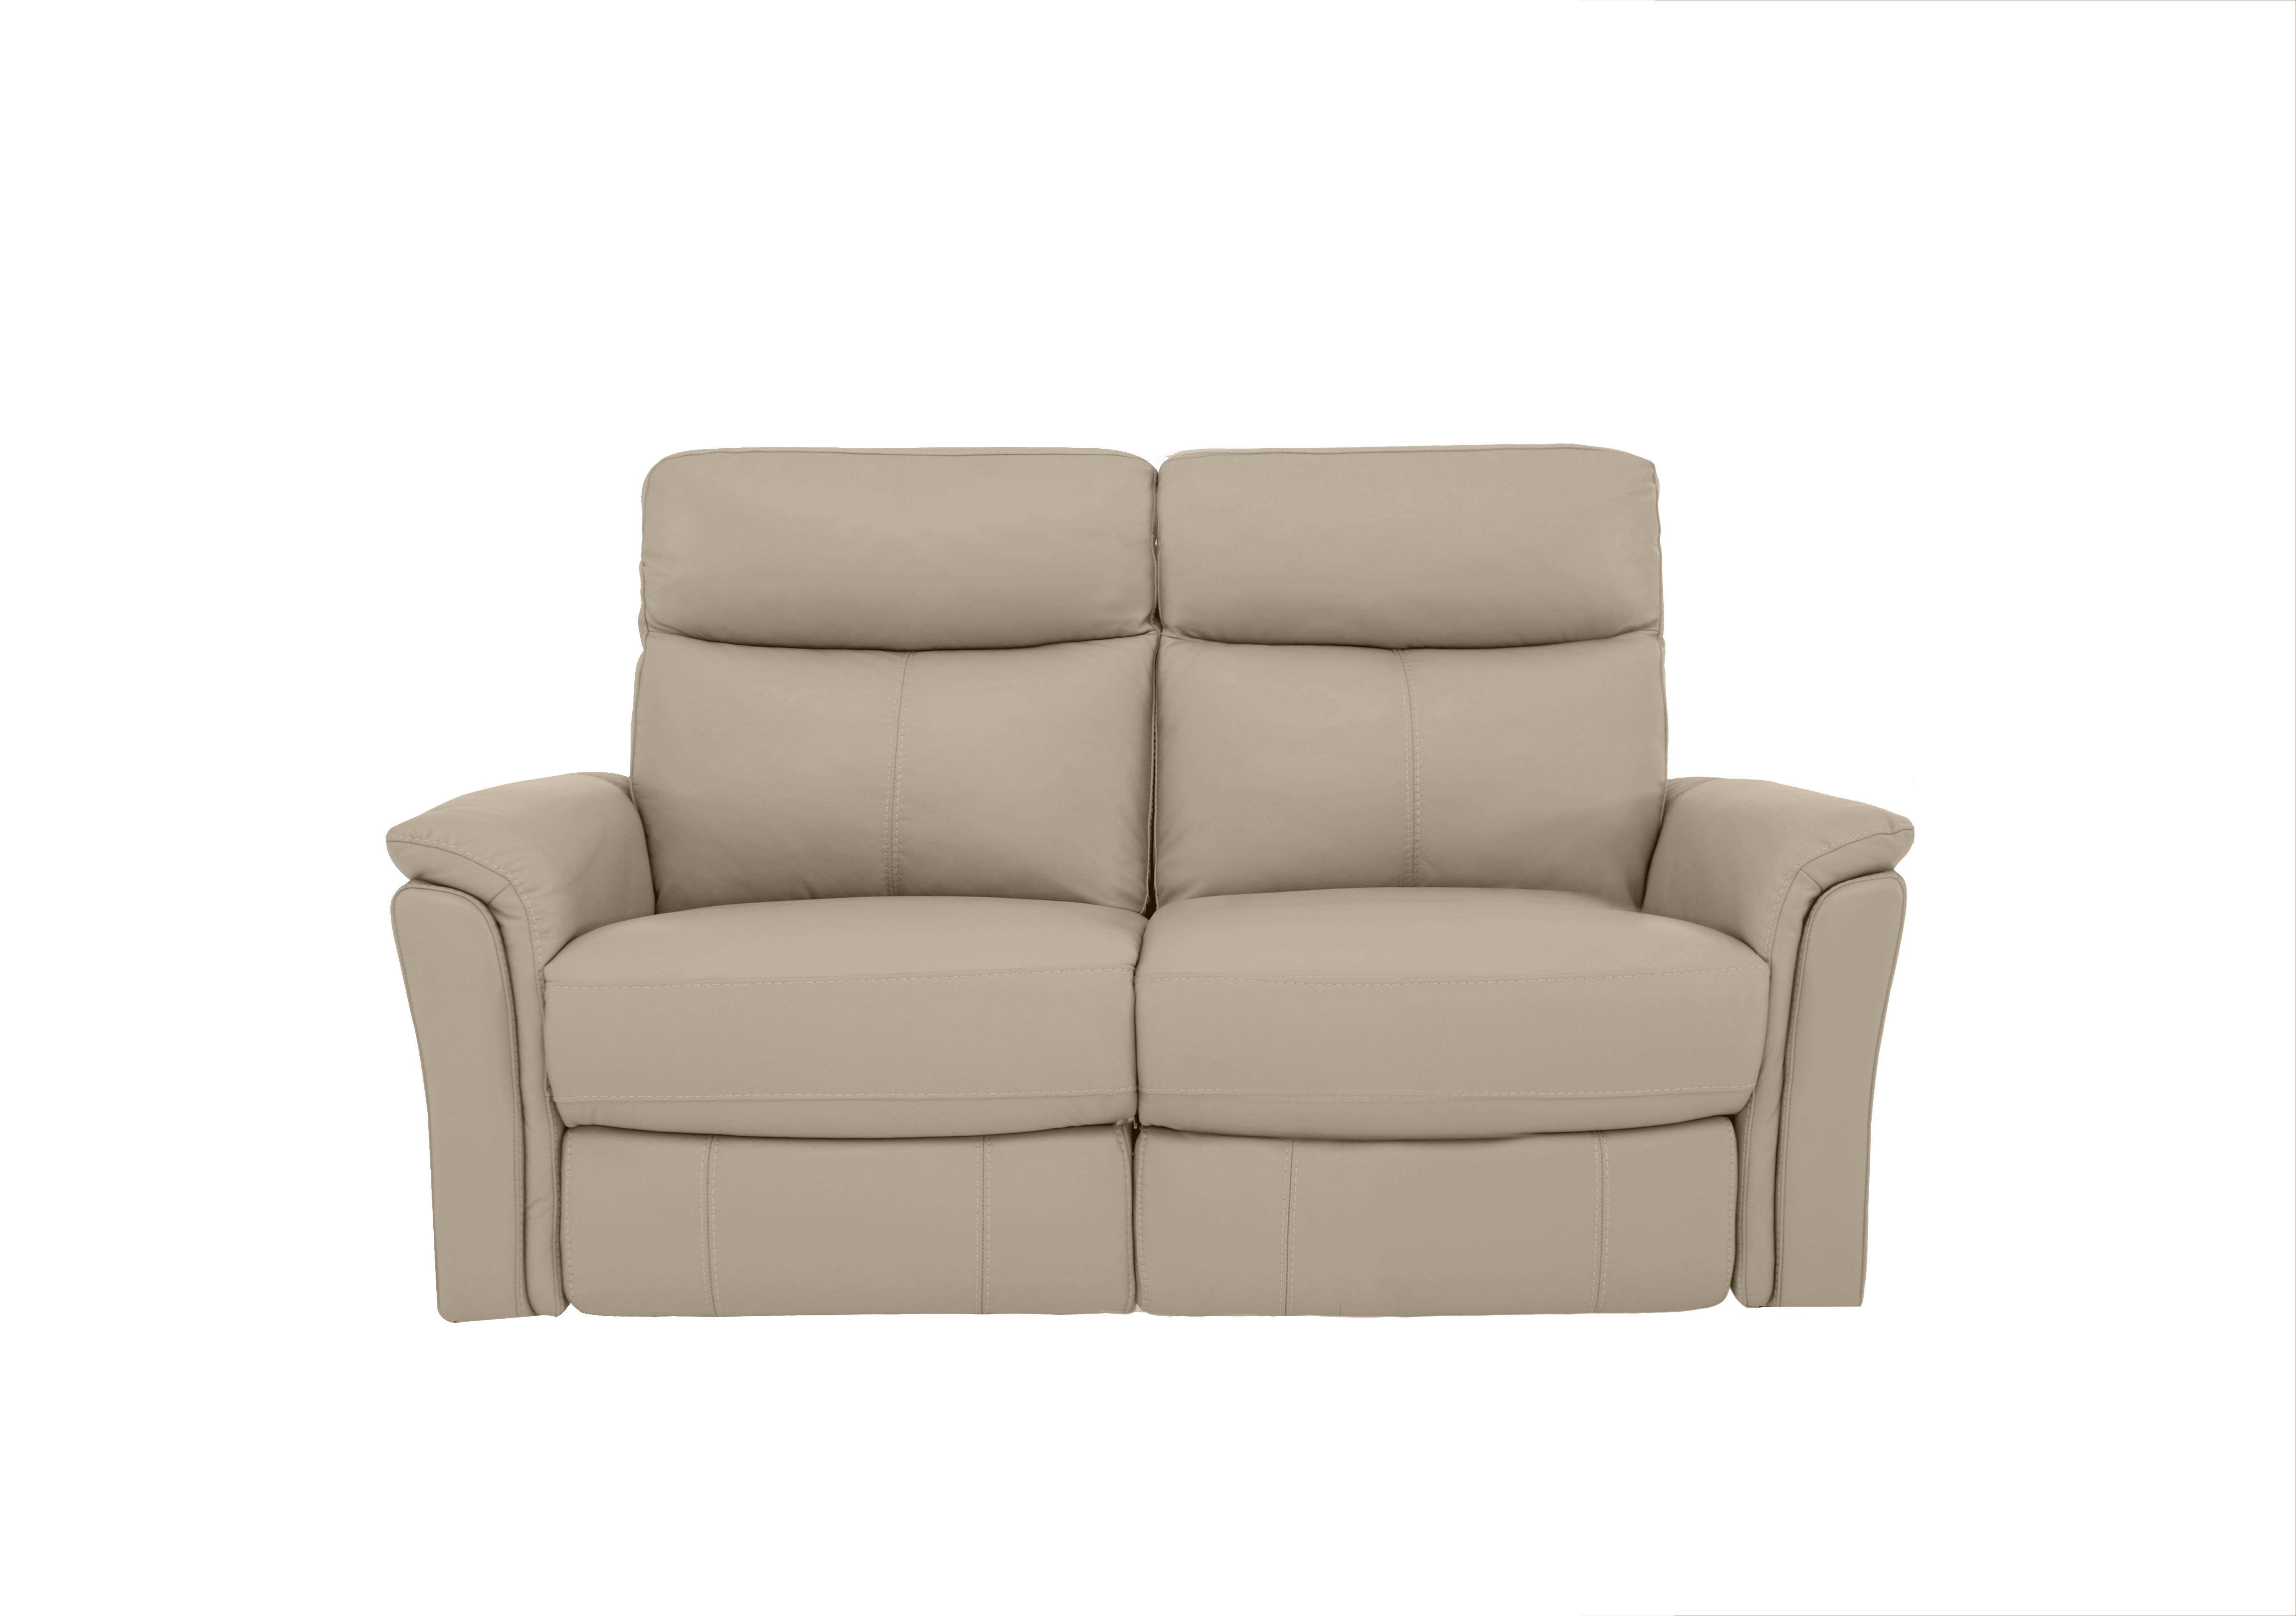 Compact Collection Piccolo 2 Seater Sofa in Bv-041e Dapple Grey on Furniture Village